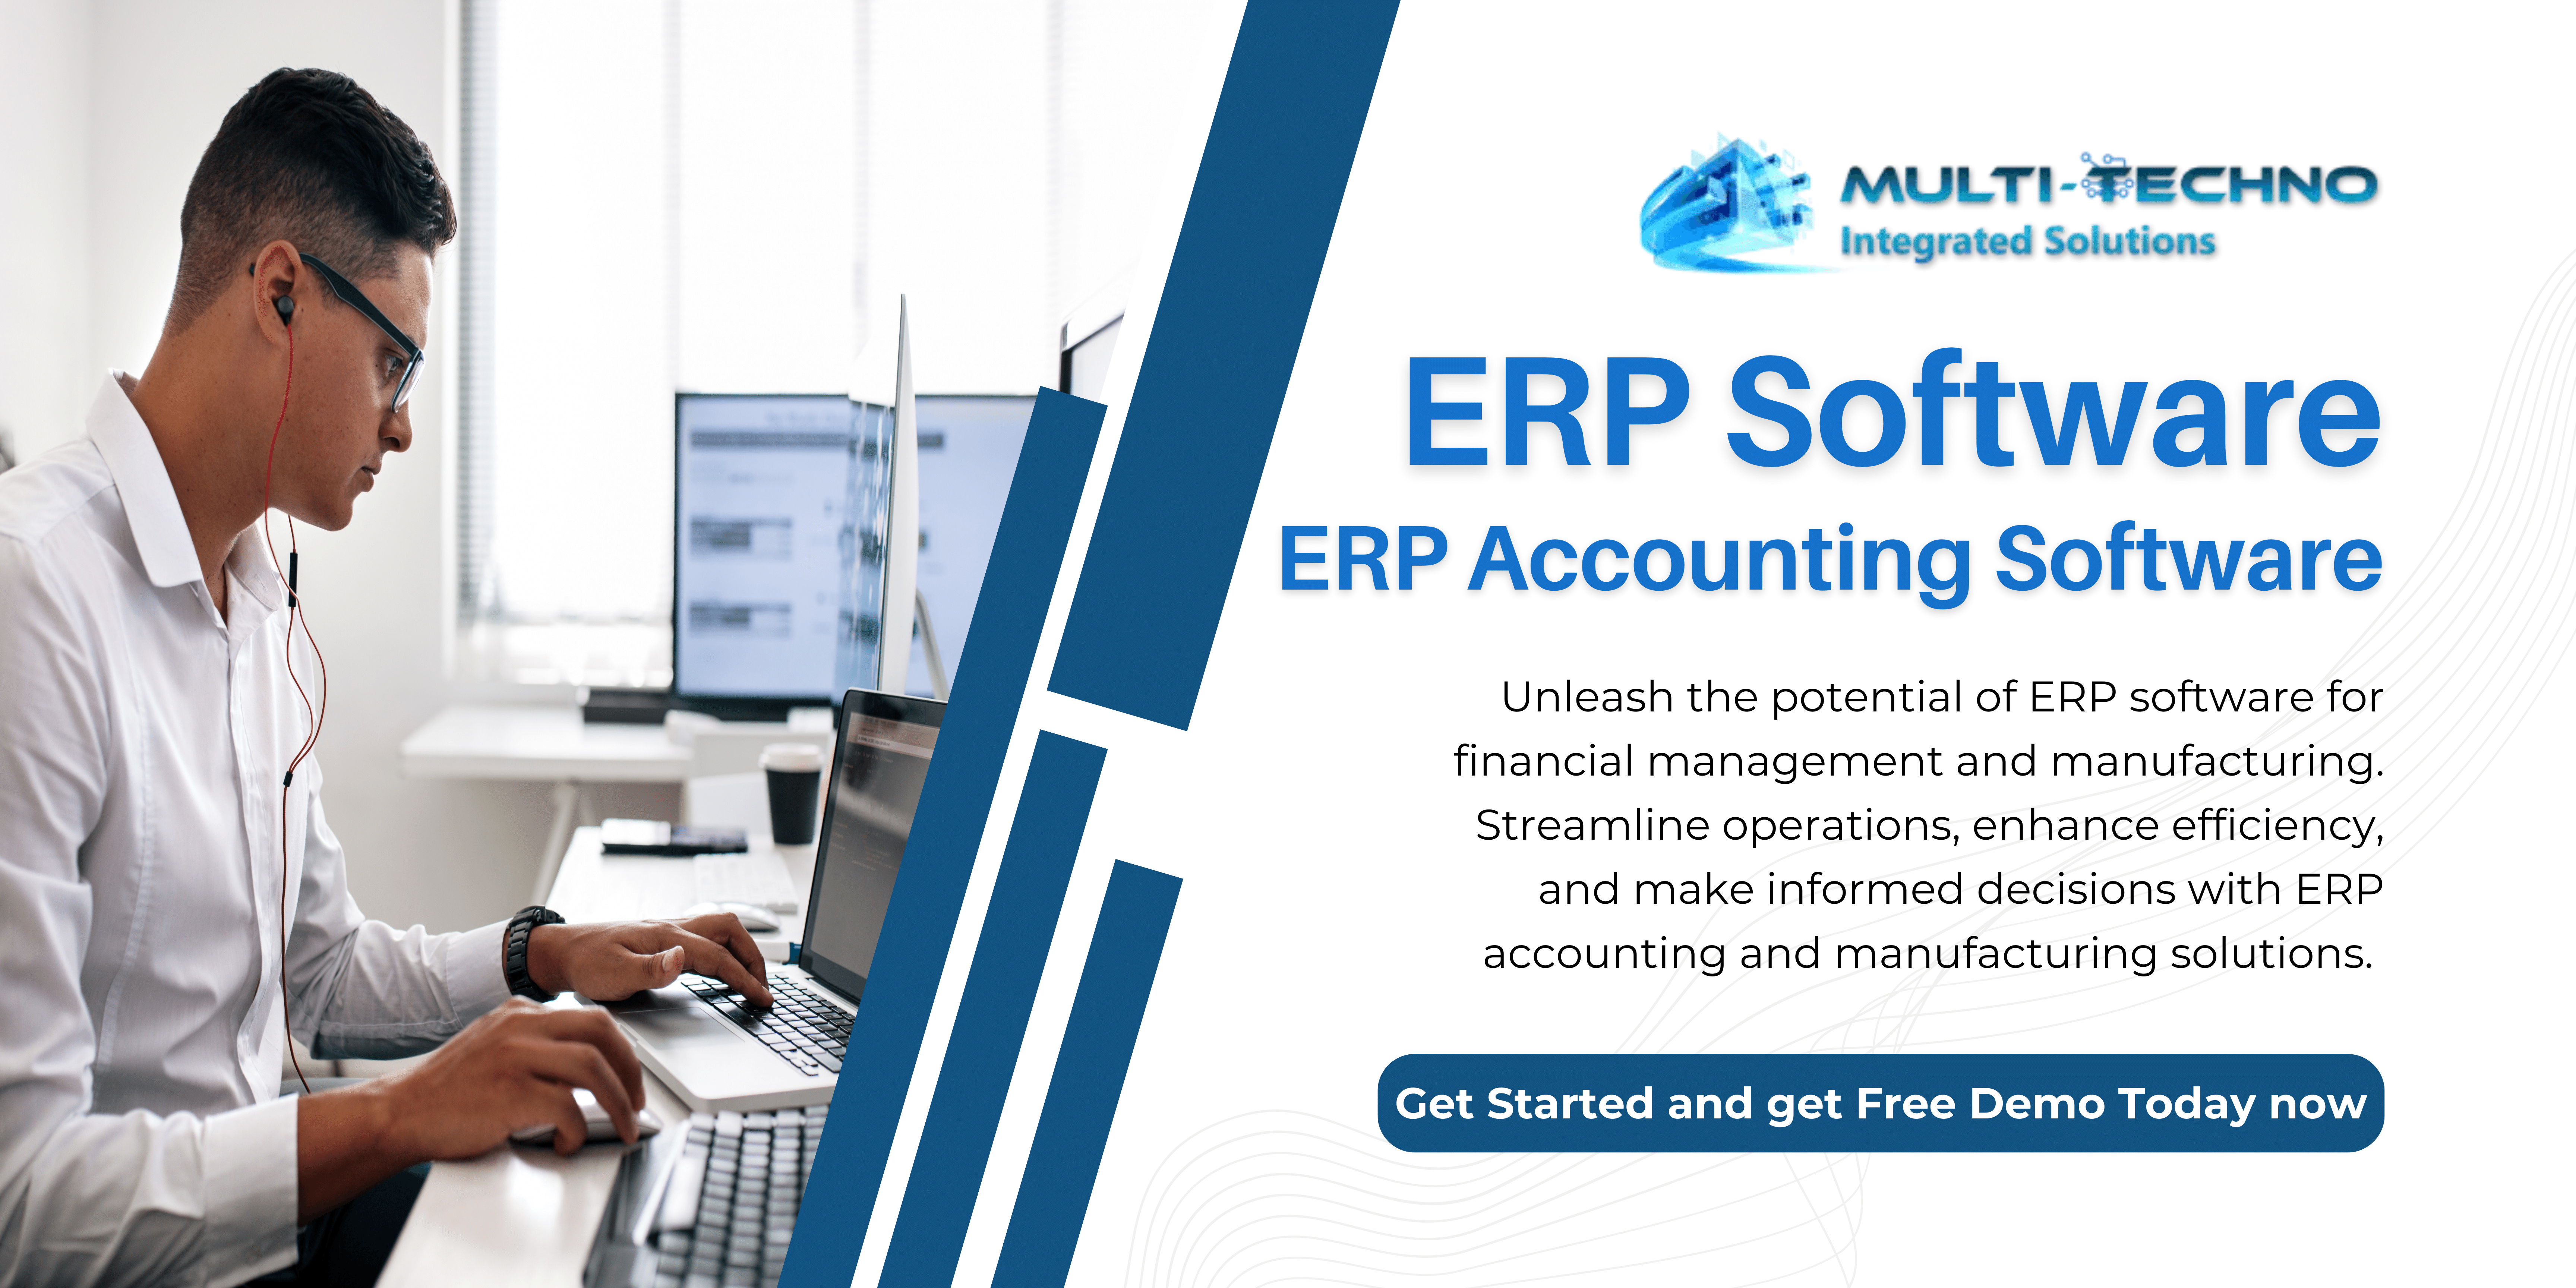 ERP Accounting Software - Multi-Techno